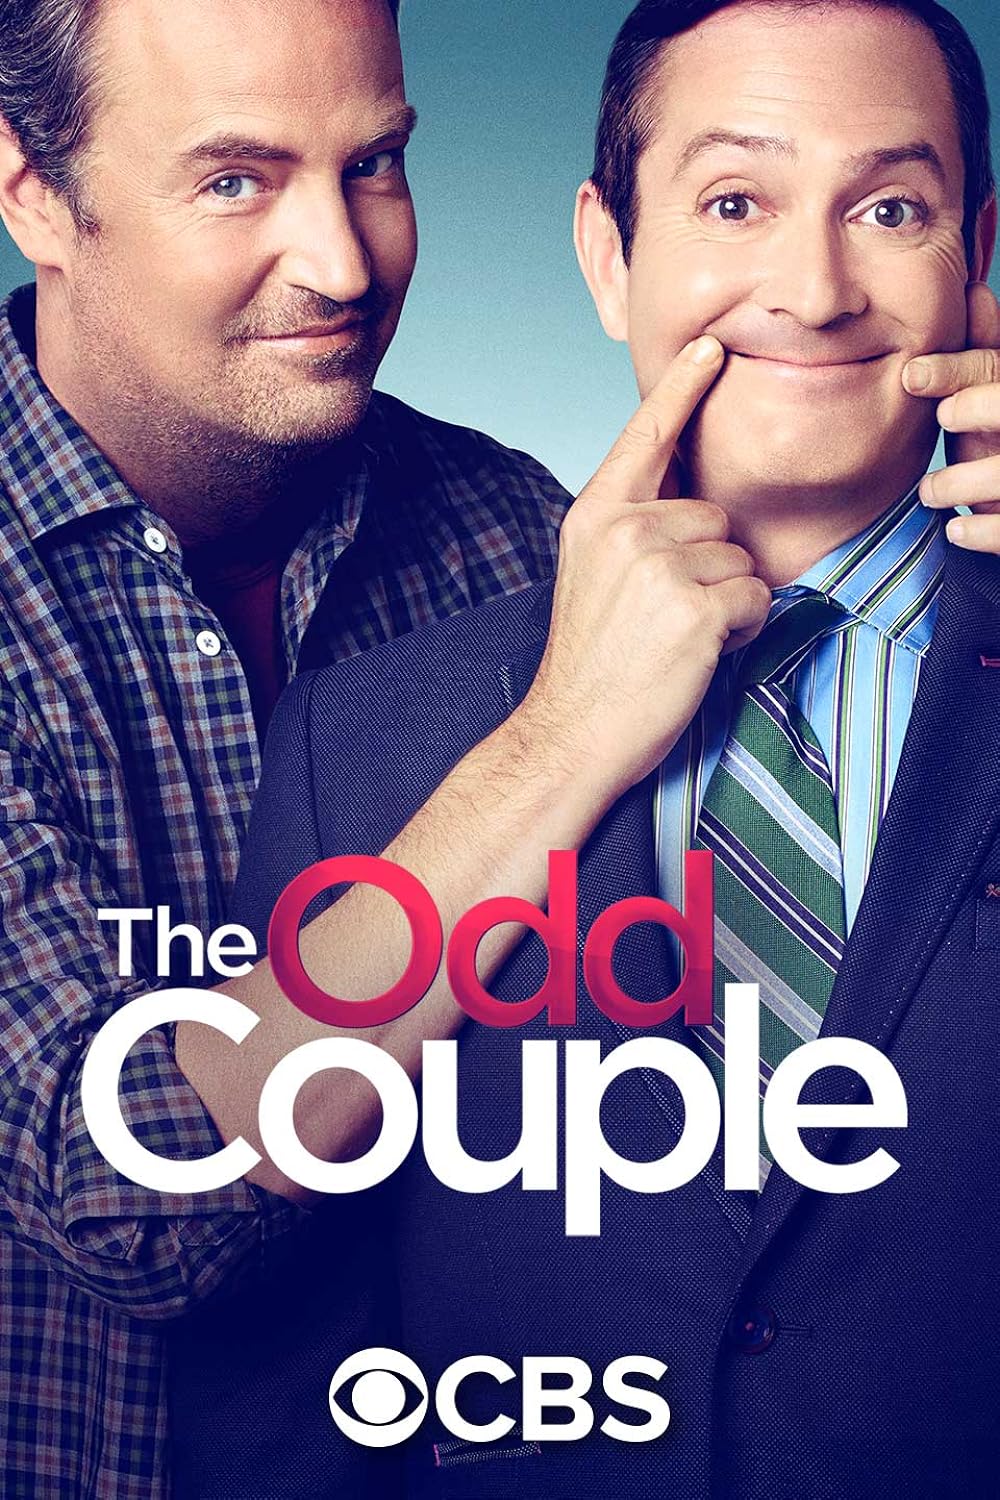 tv show the odd couple cast